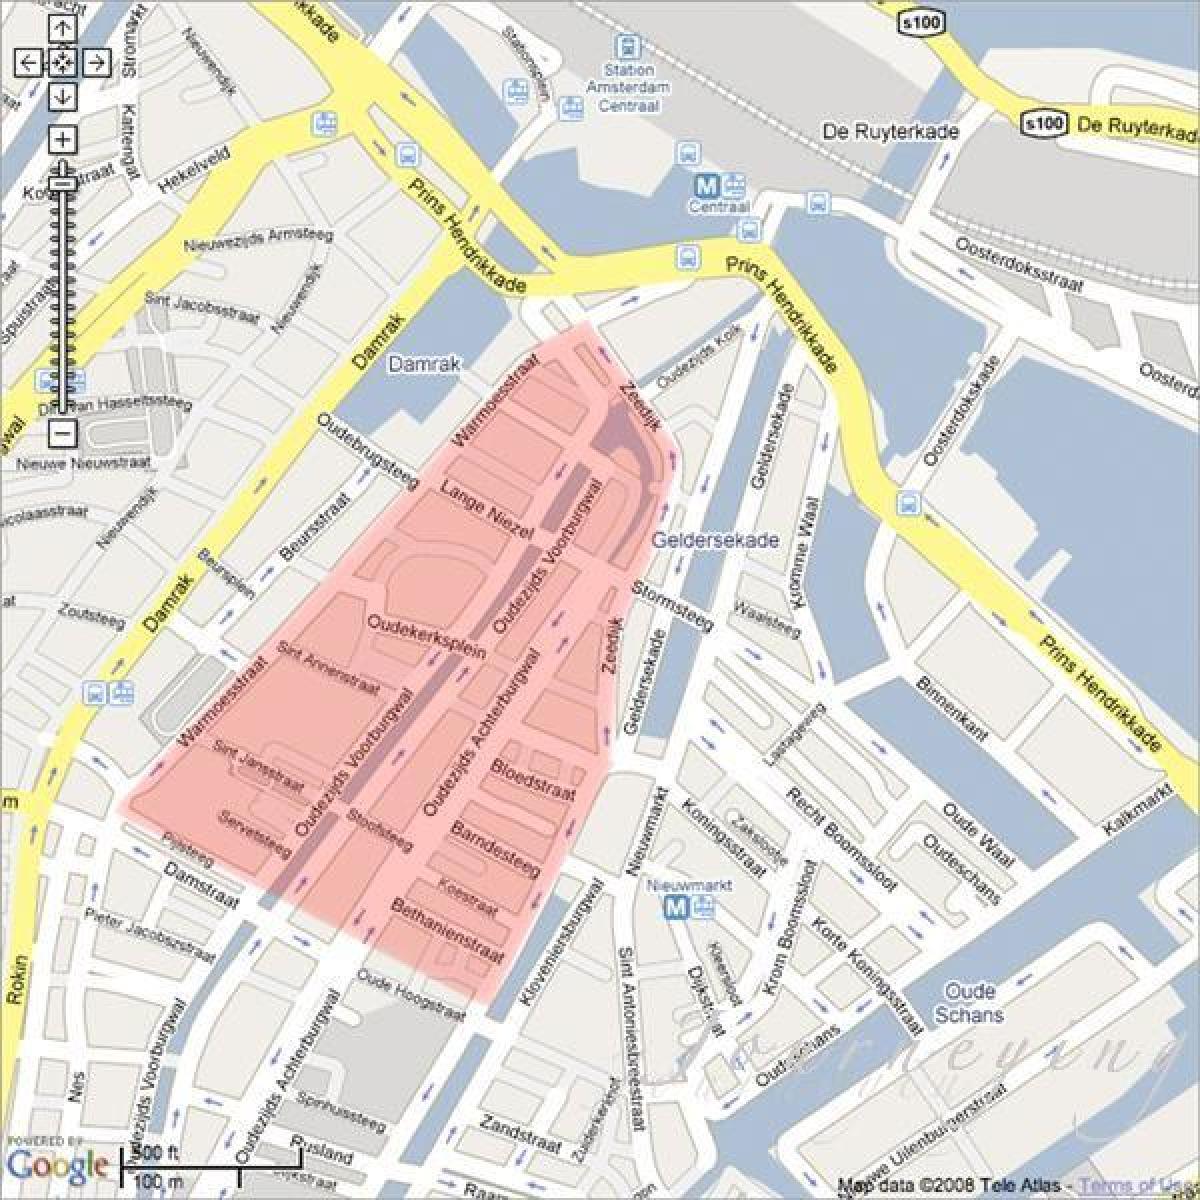 Mapa de Viena barri vermell